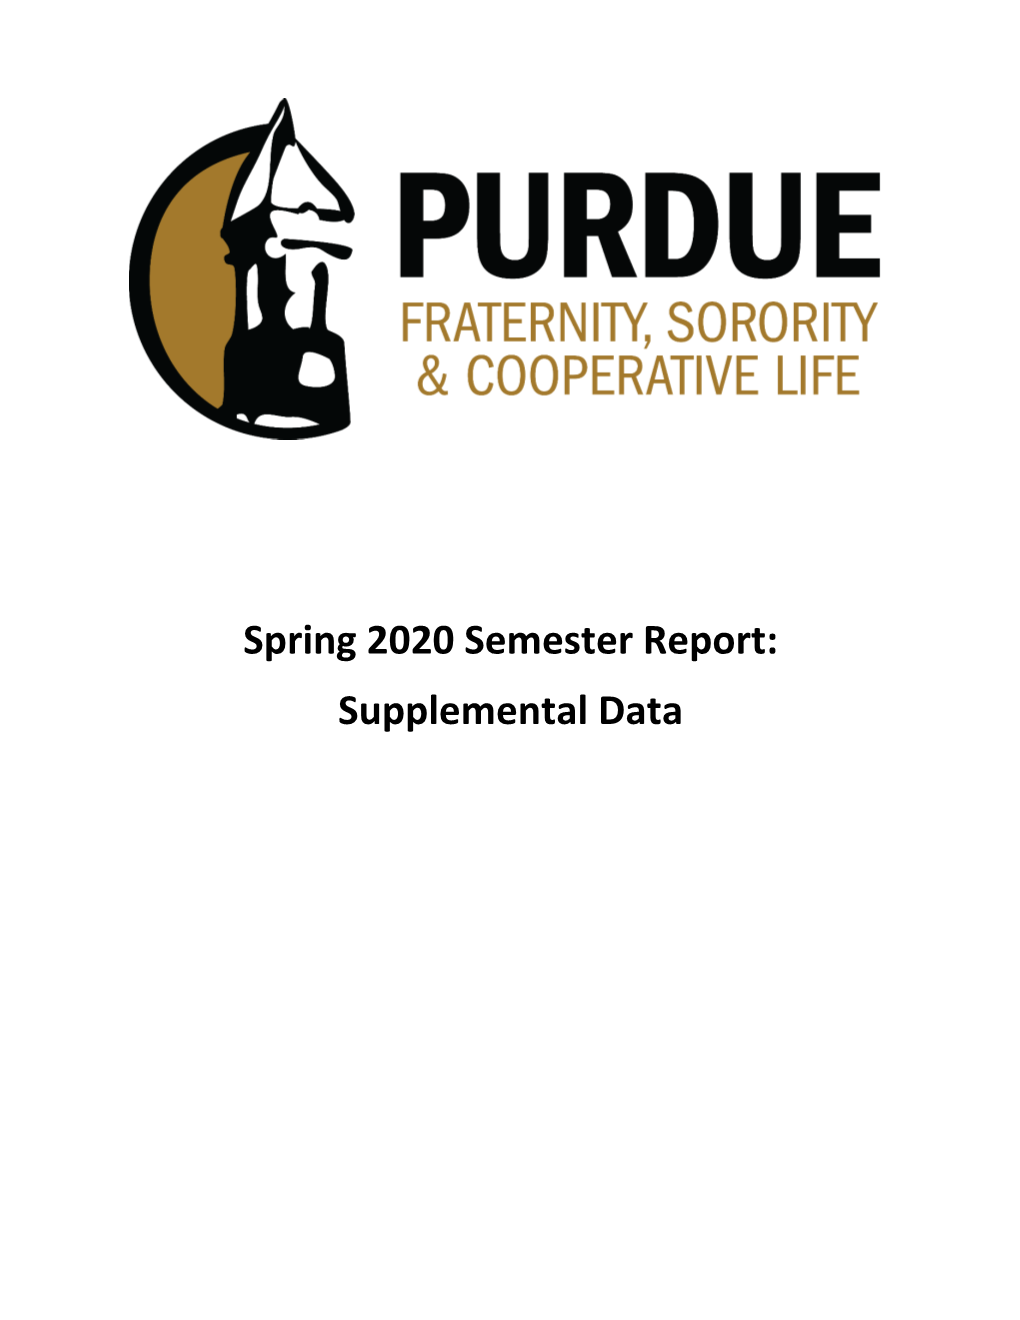 Spring 2020 Semester Report: Supplemental Data